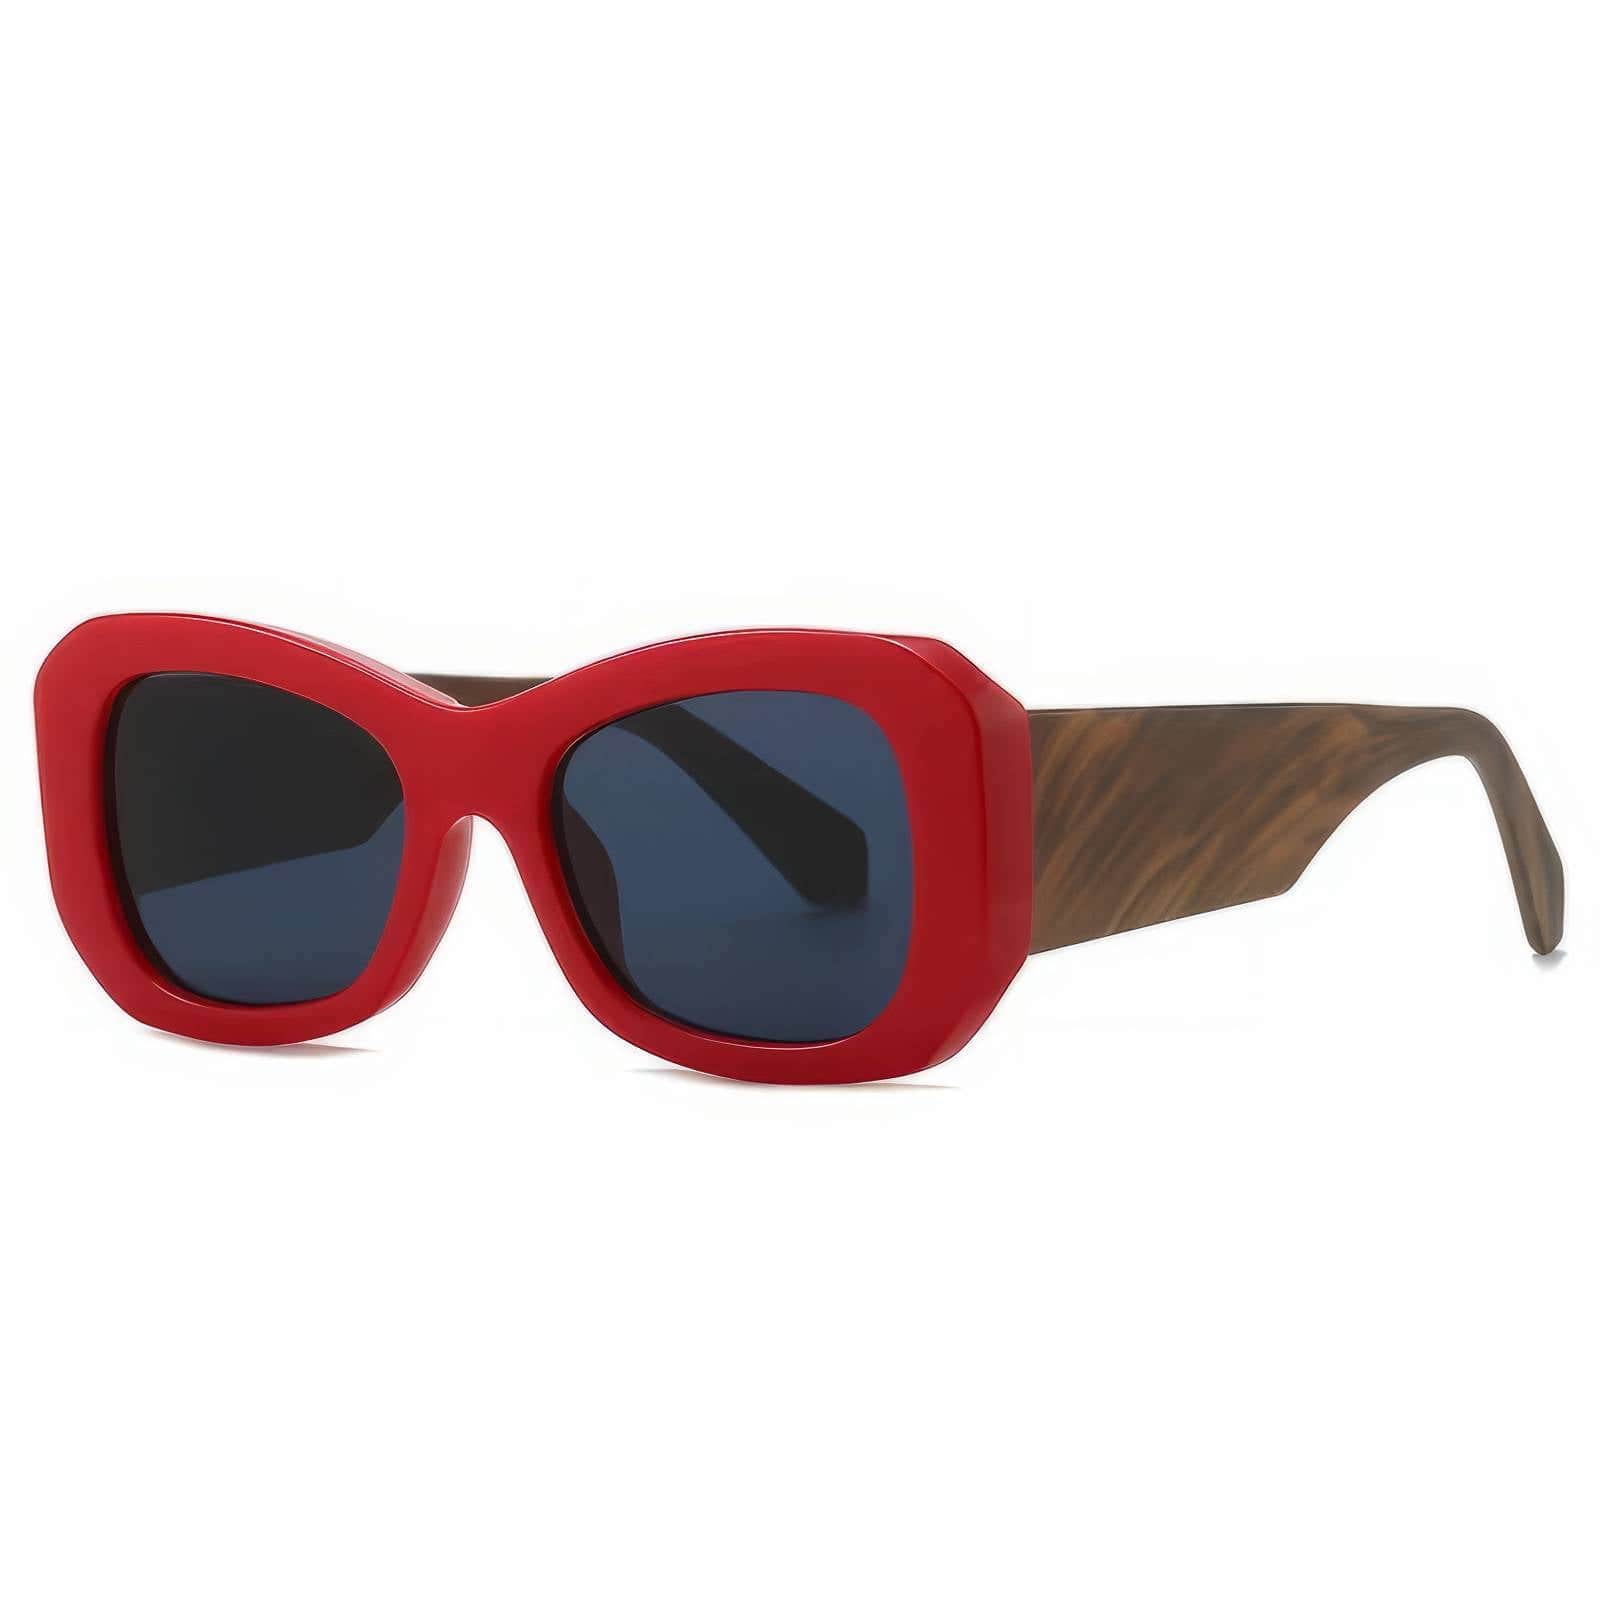 Funky Trending Square Sunglasses Red/Gray / Resin